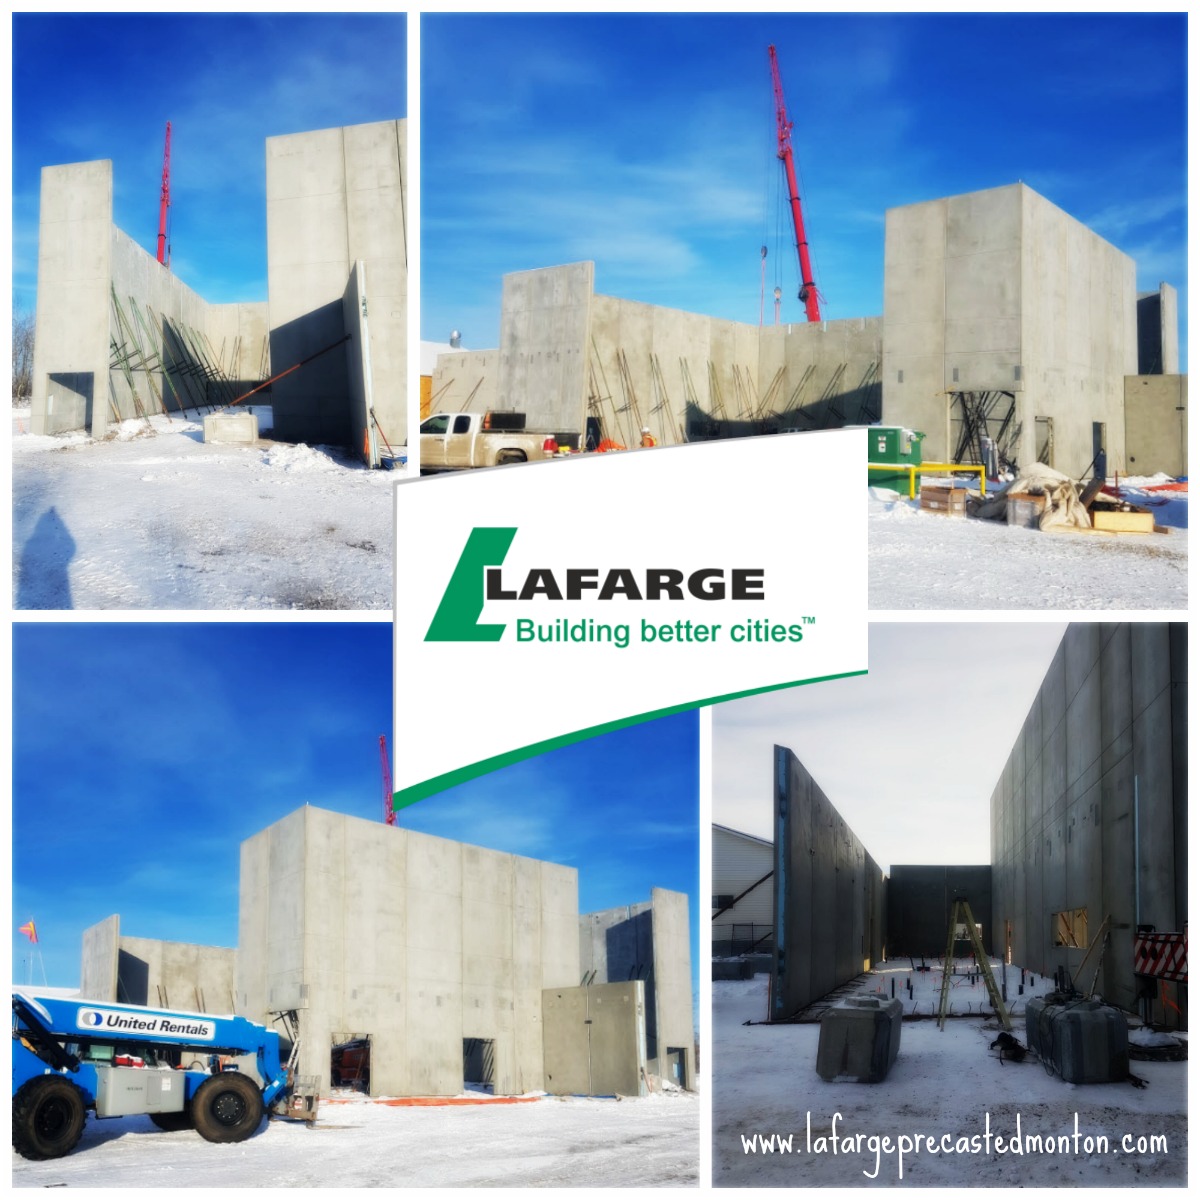 Concrete Wall Installations by Lafarge Precast Edmonton